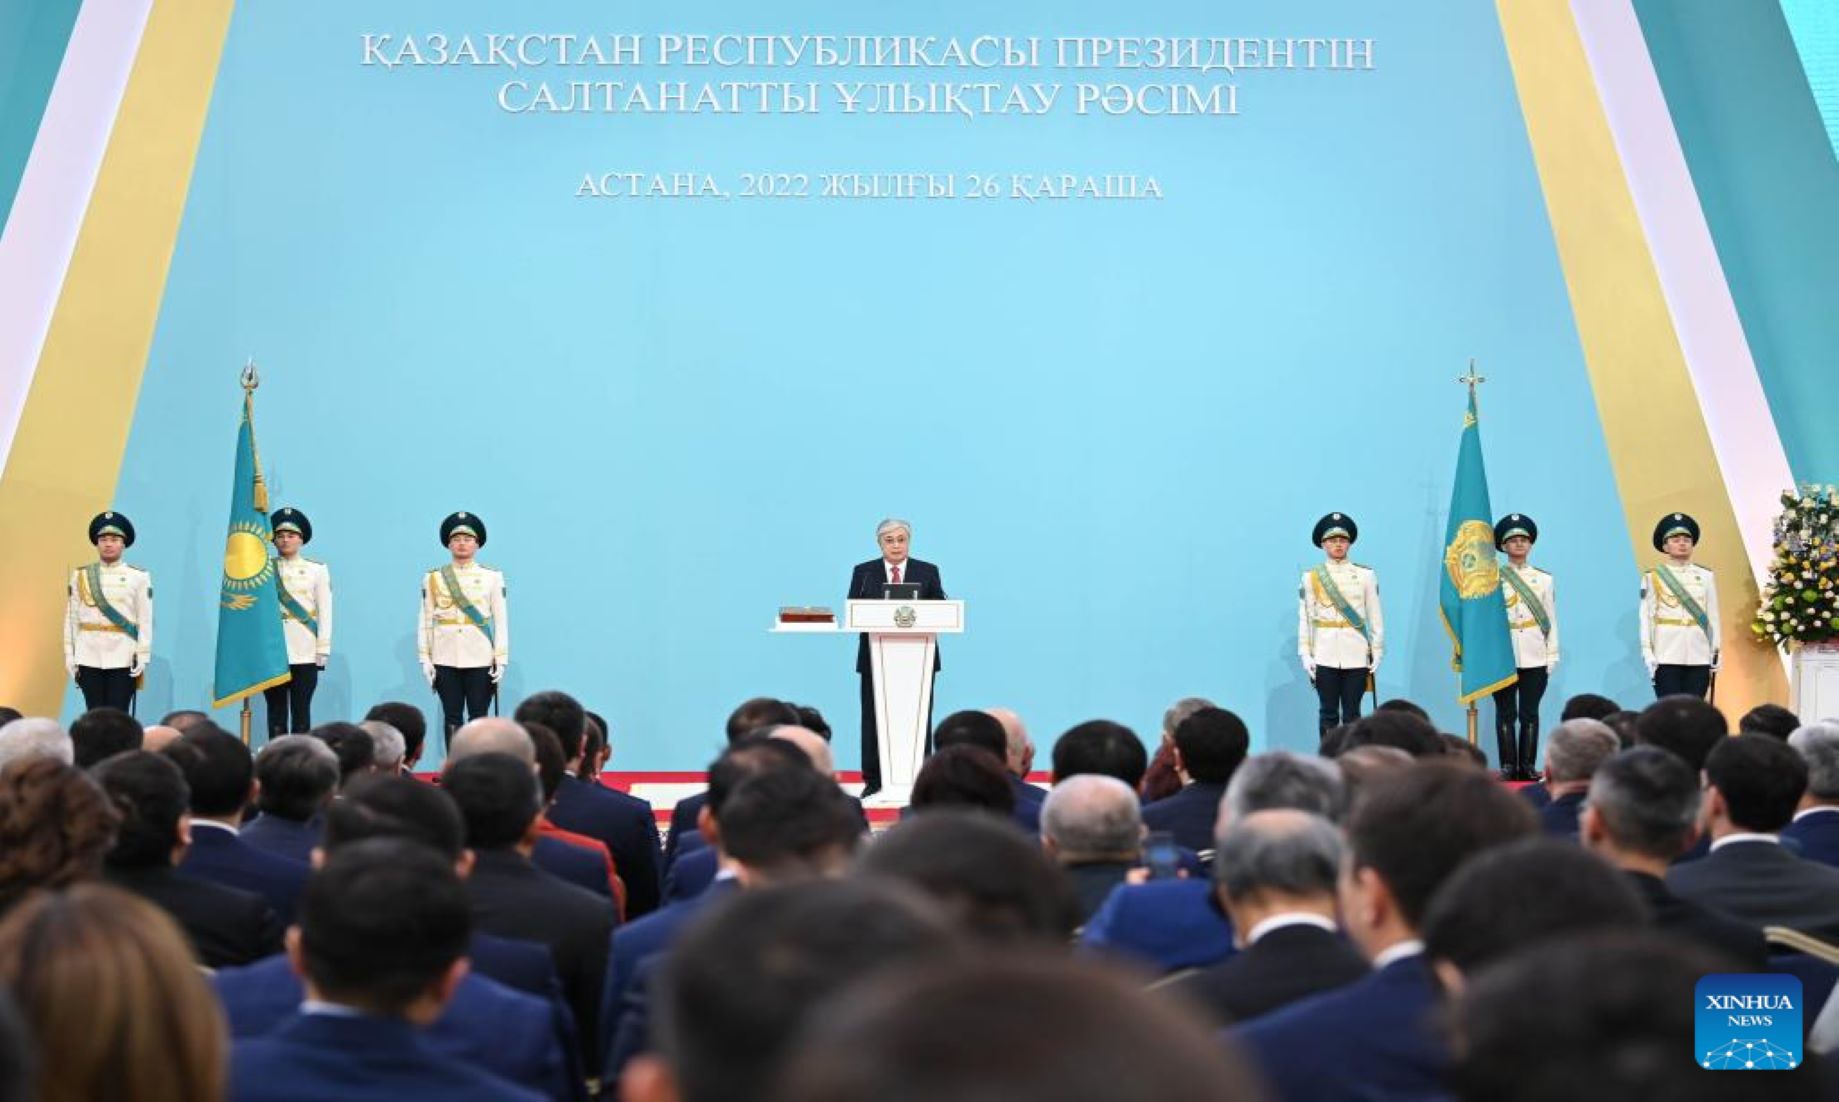 Tokayev Sworn In As Kazakh President